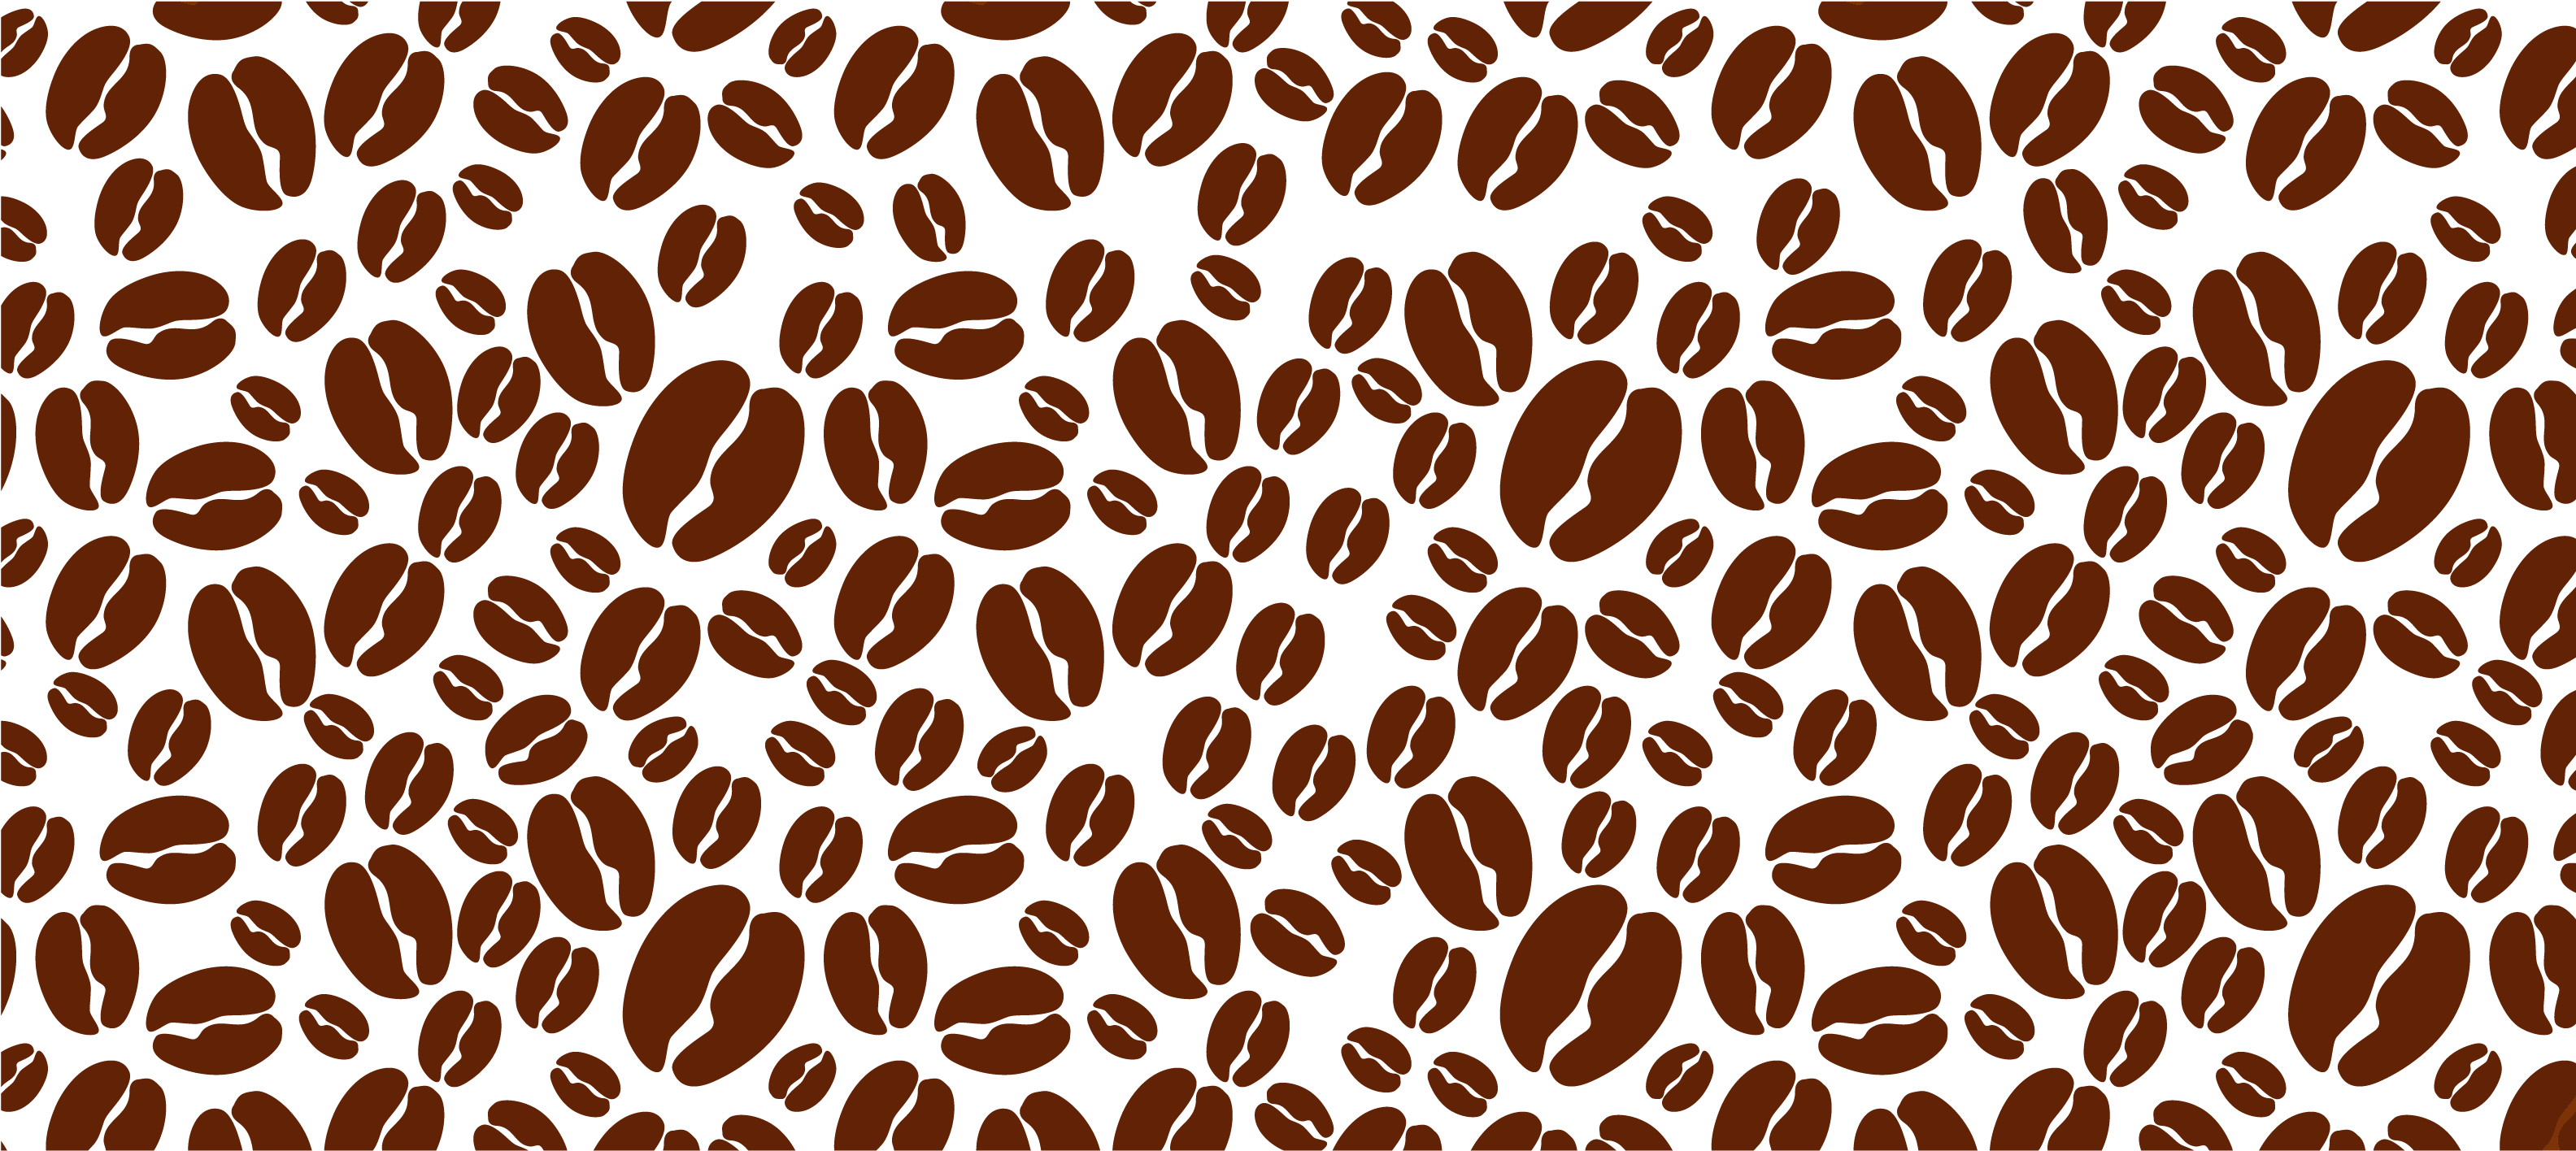 Coffee Bean Euclidean Vector Background Beans